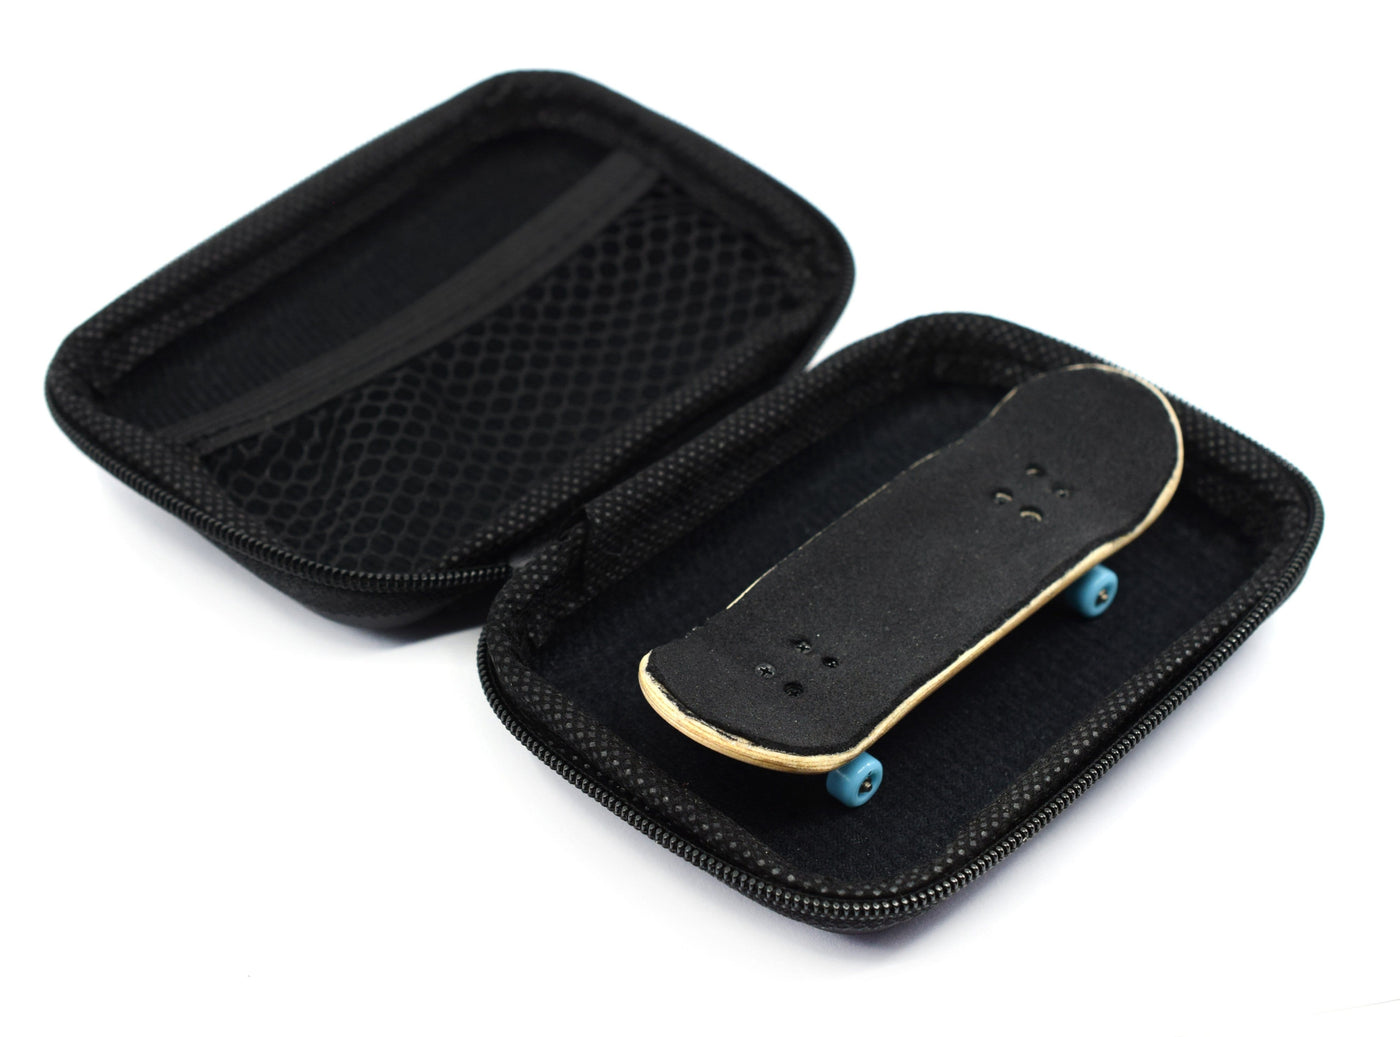 Teak Tuning Mini Fingerboard Travel Carry Case - Blue